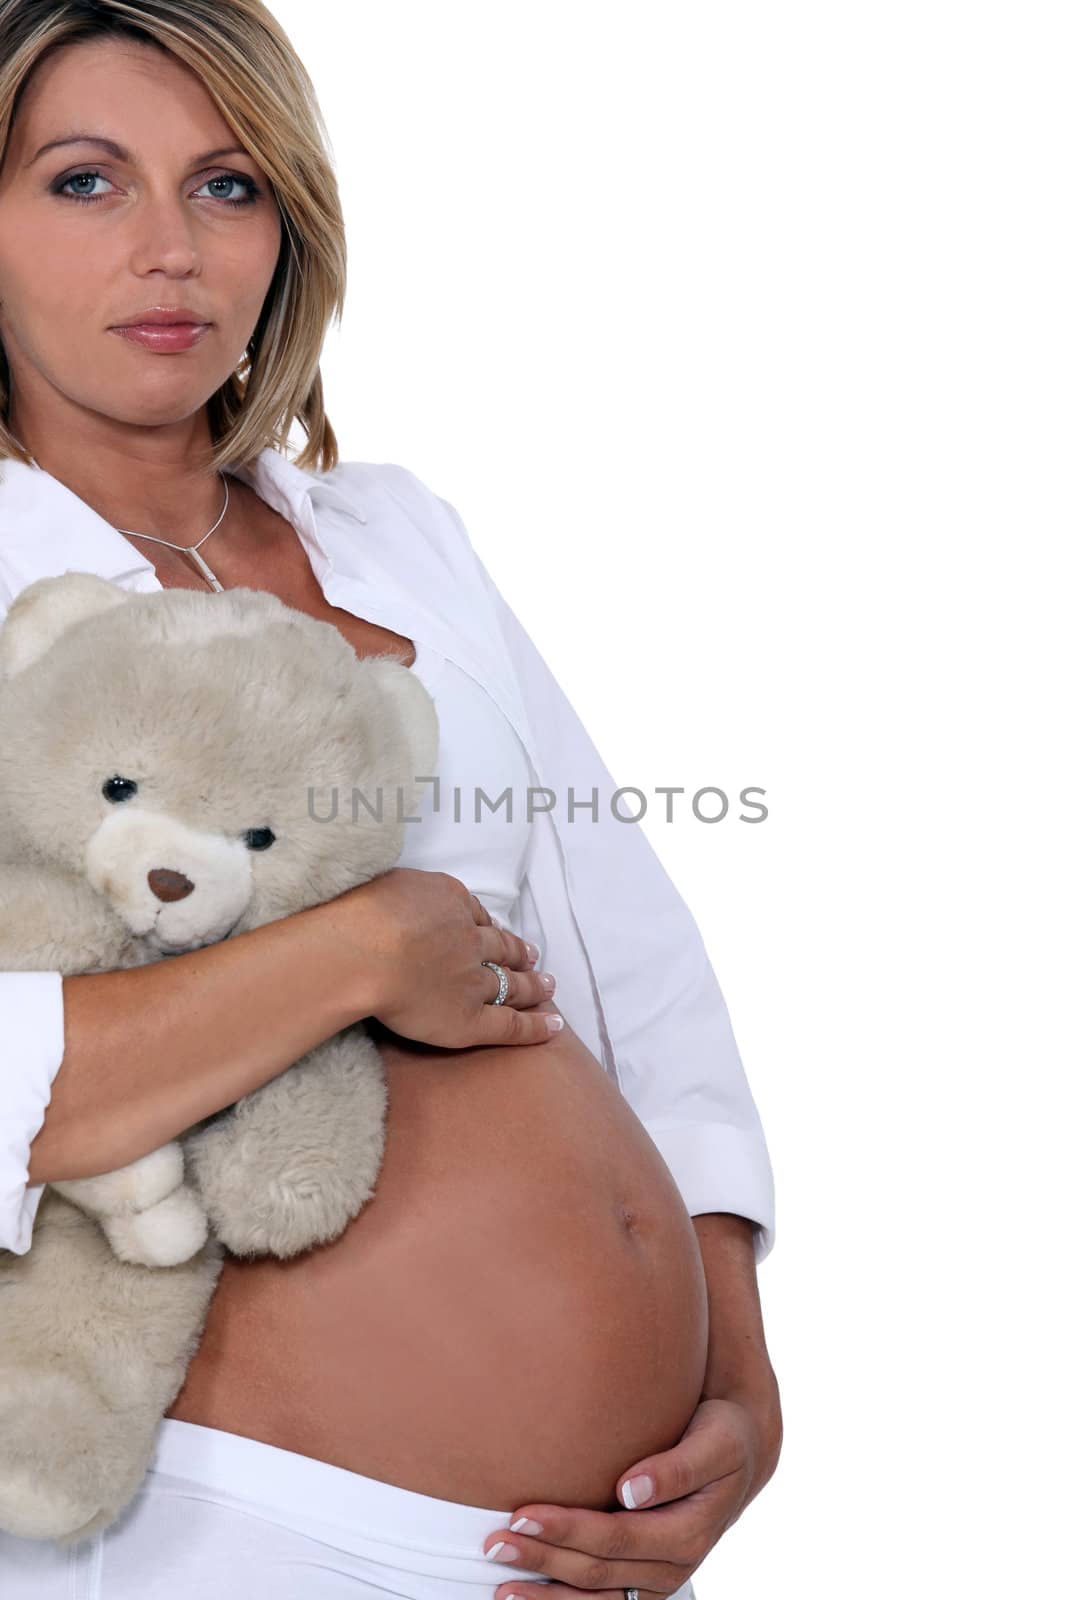 A pregnant woman. by phovoir